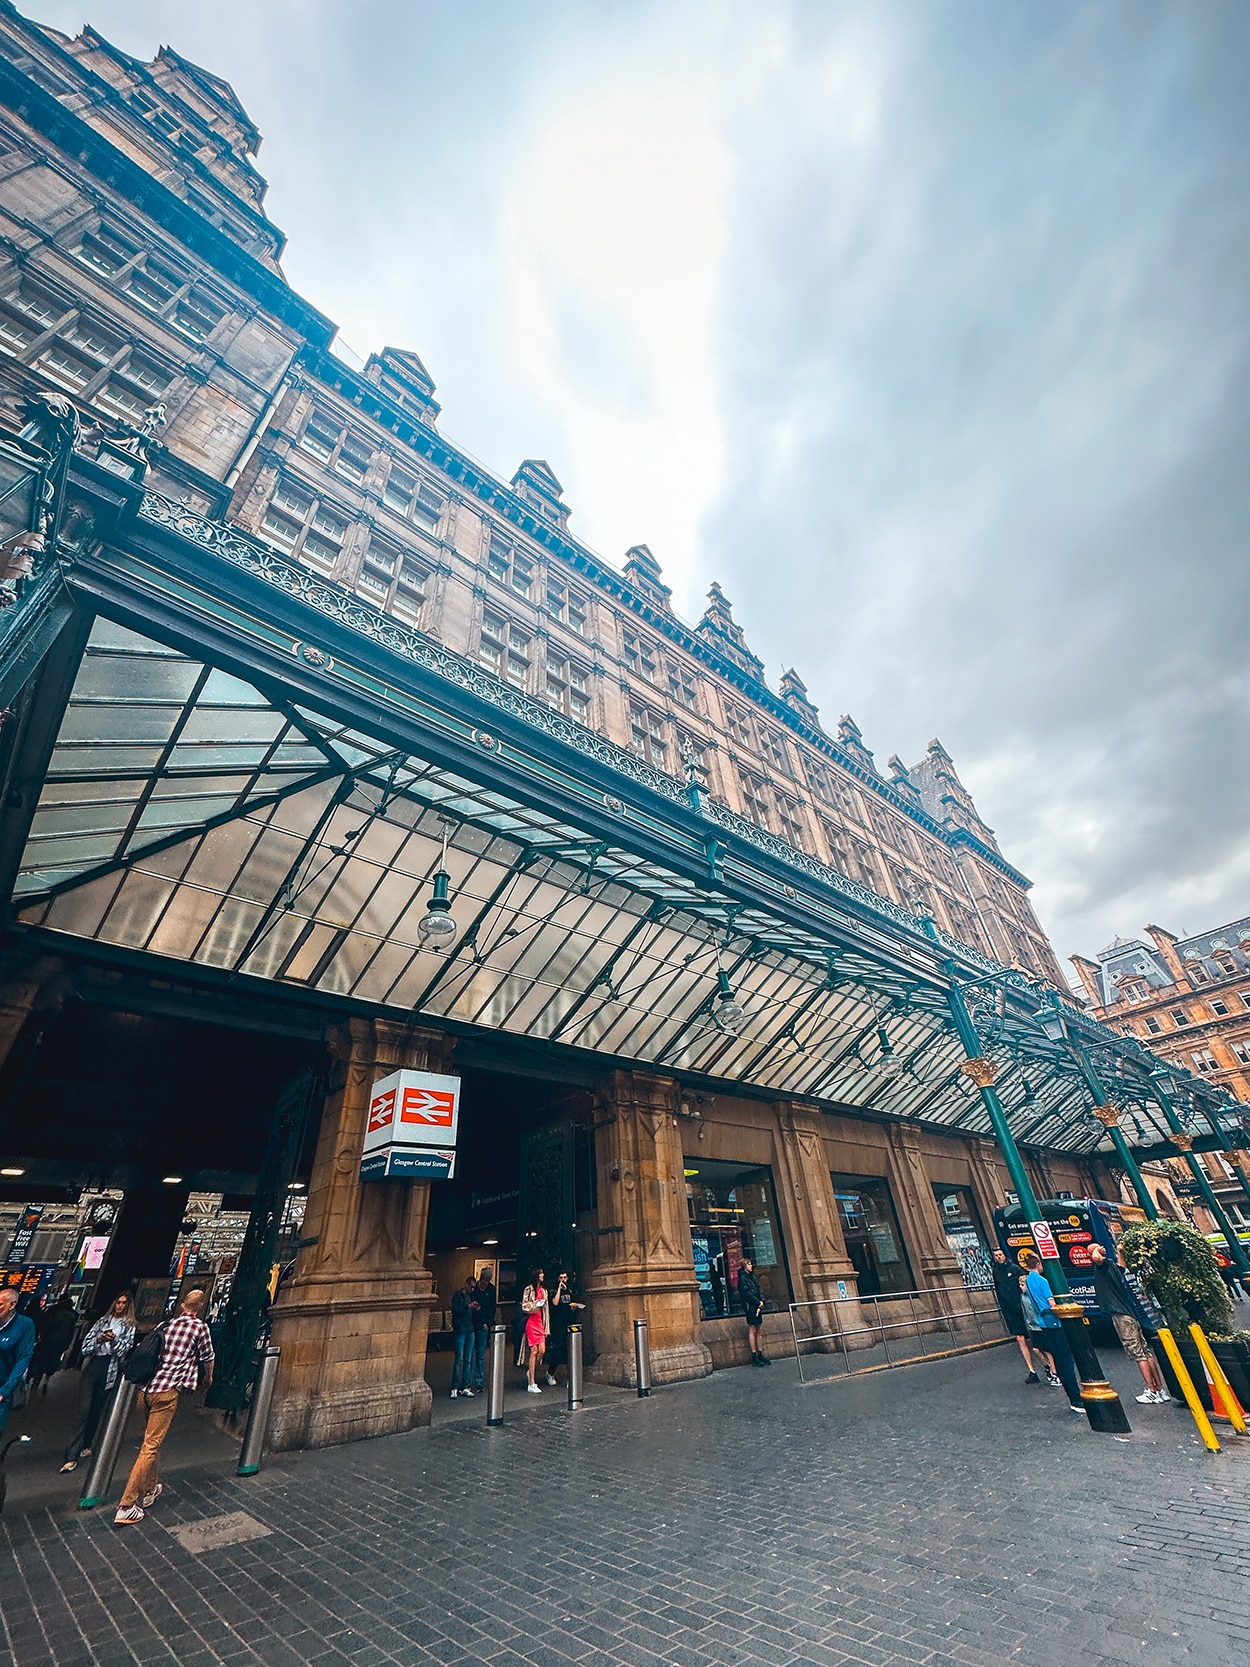 Glasgow Central Station in Glasgow Scotland - photo credit Keryn Means editor of TwistTravelMag.com